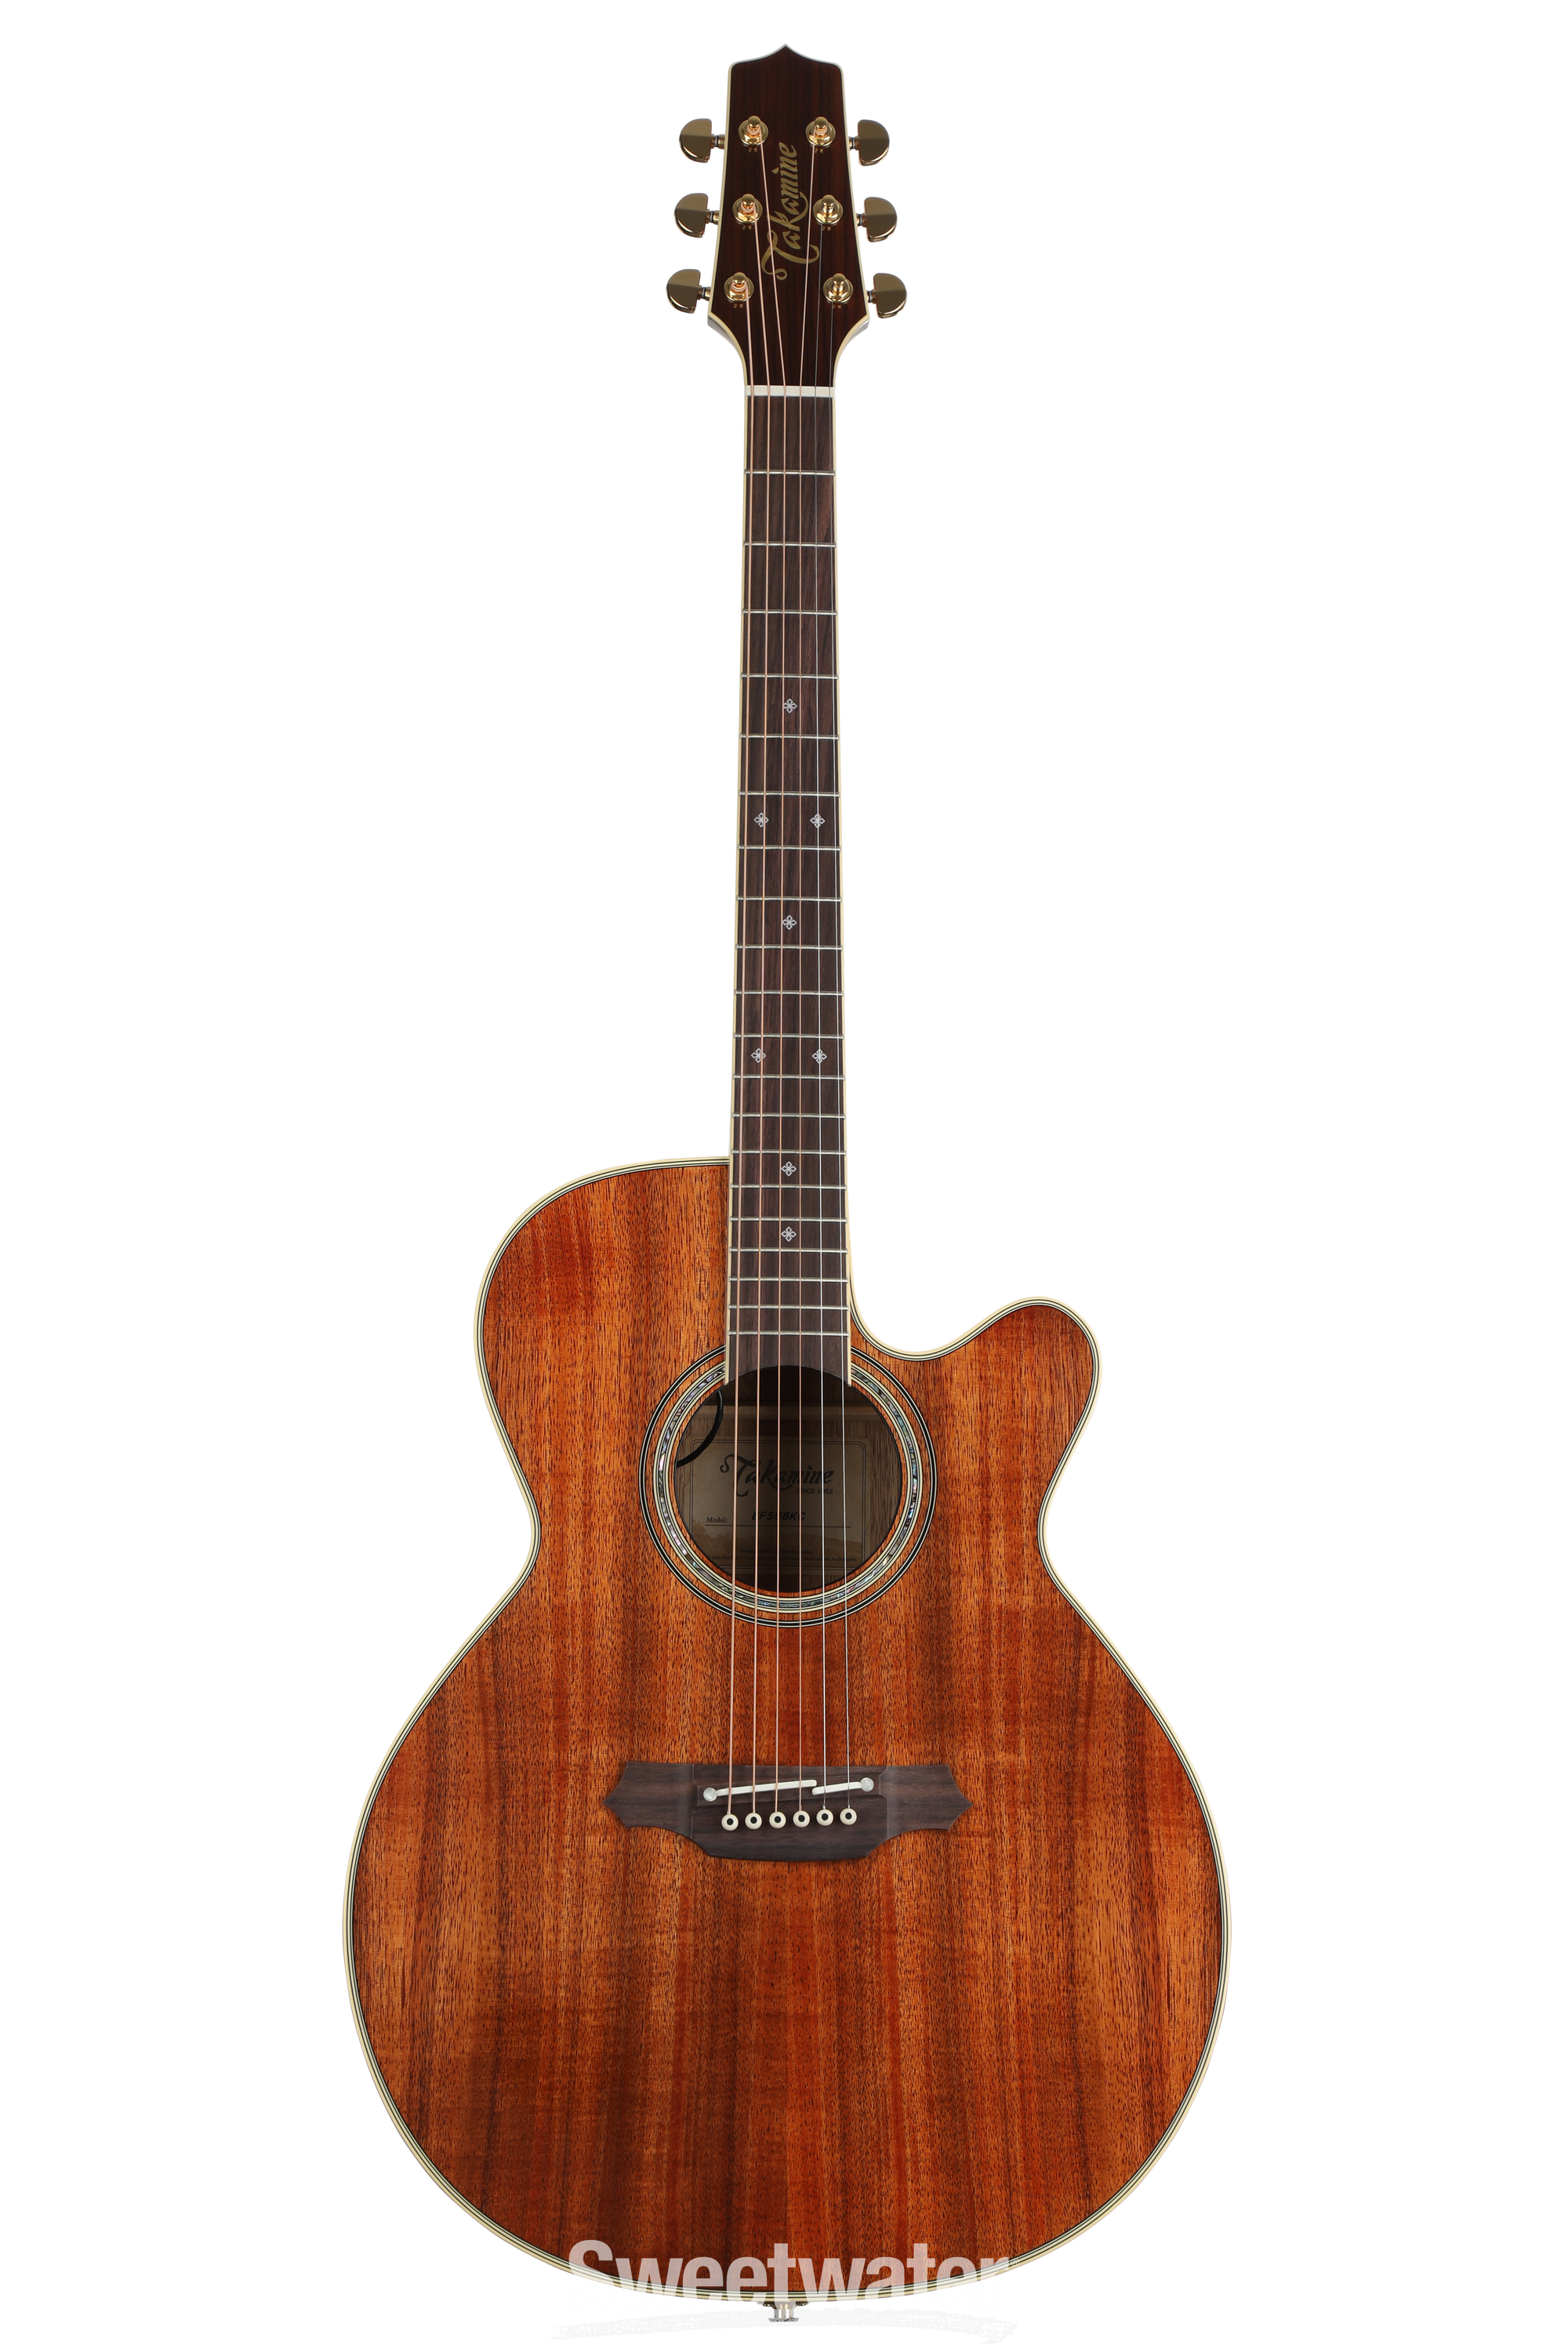 Takamine Legacy JEF508KC Acoustic-electric Guitar - Natural Koa